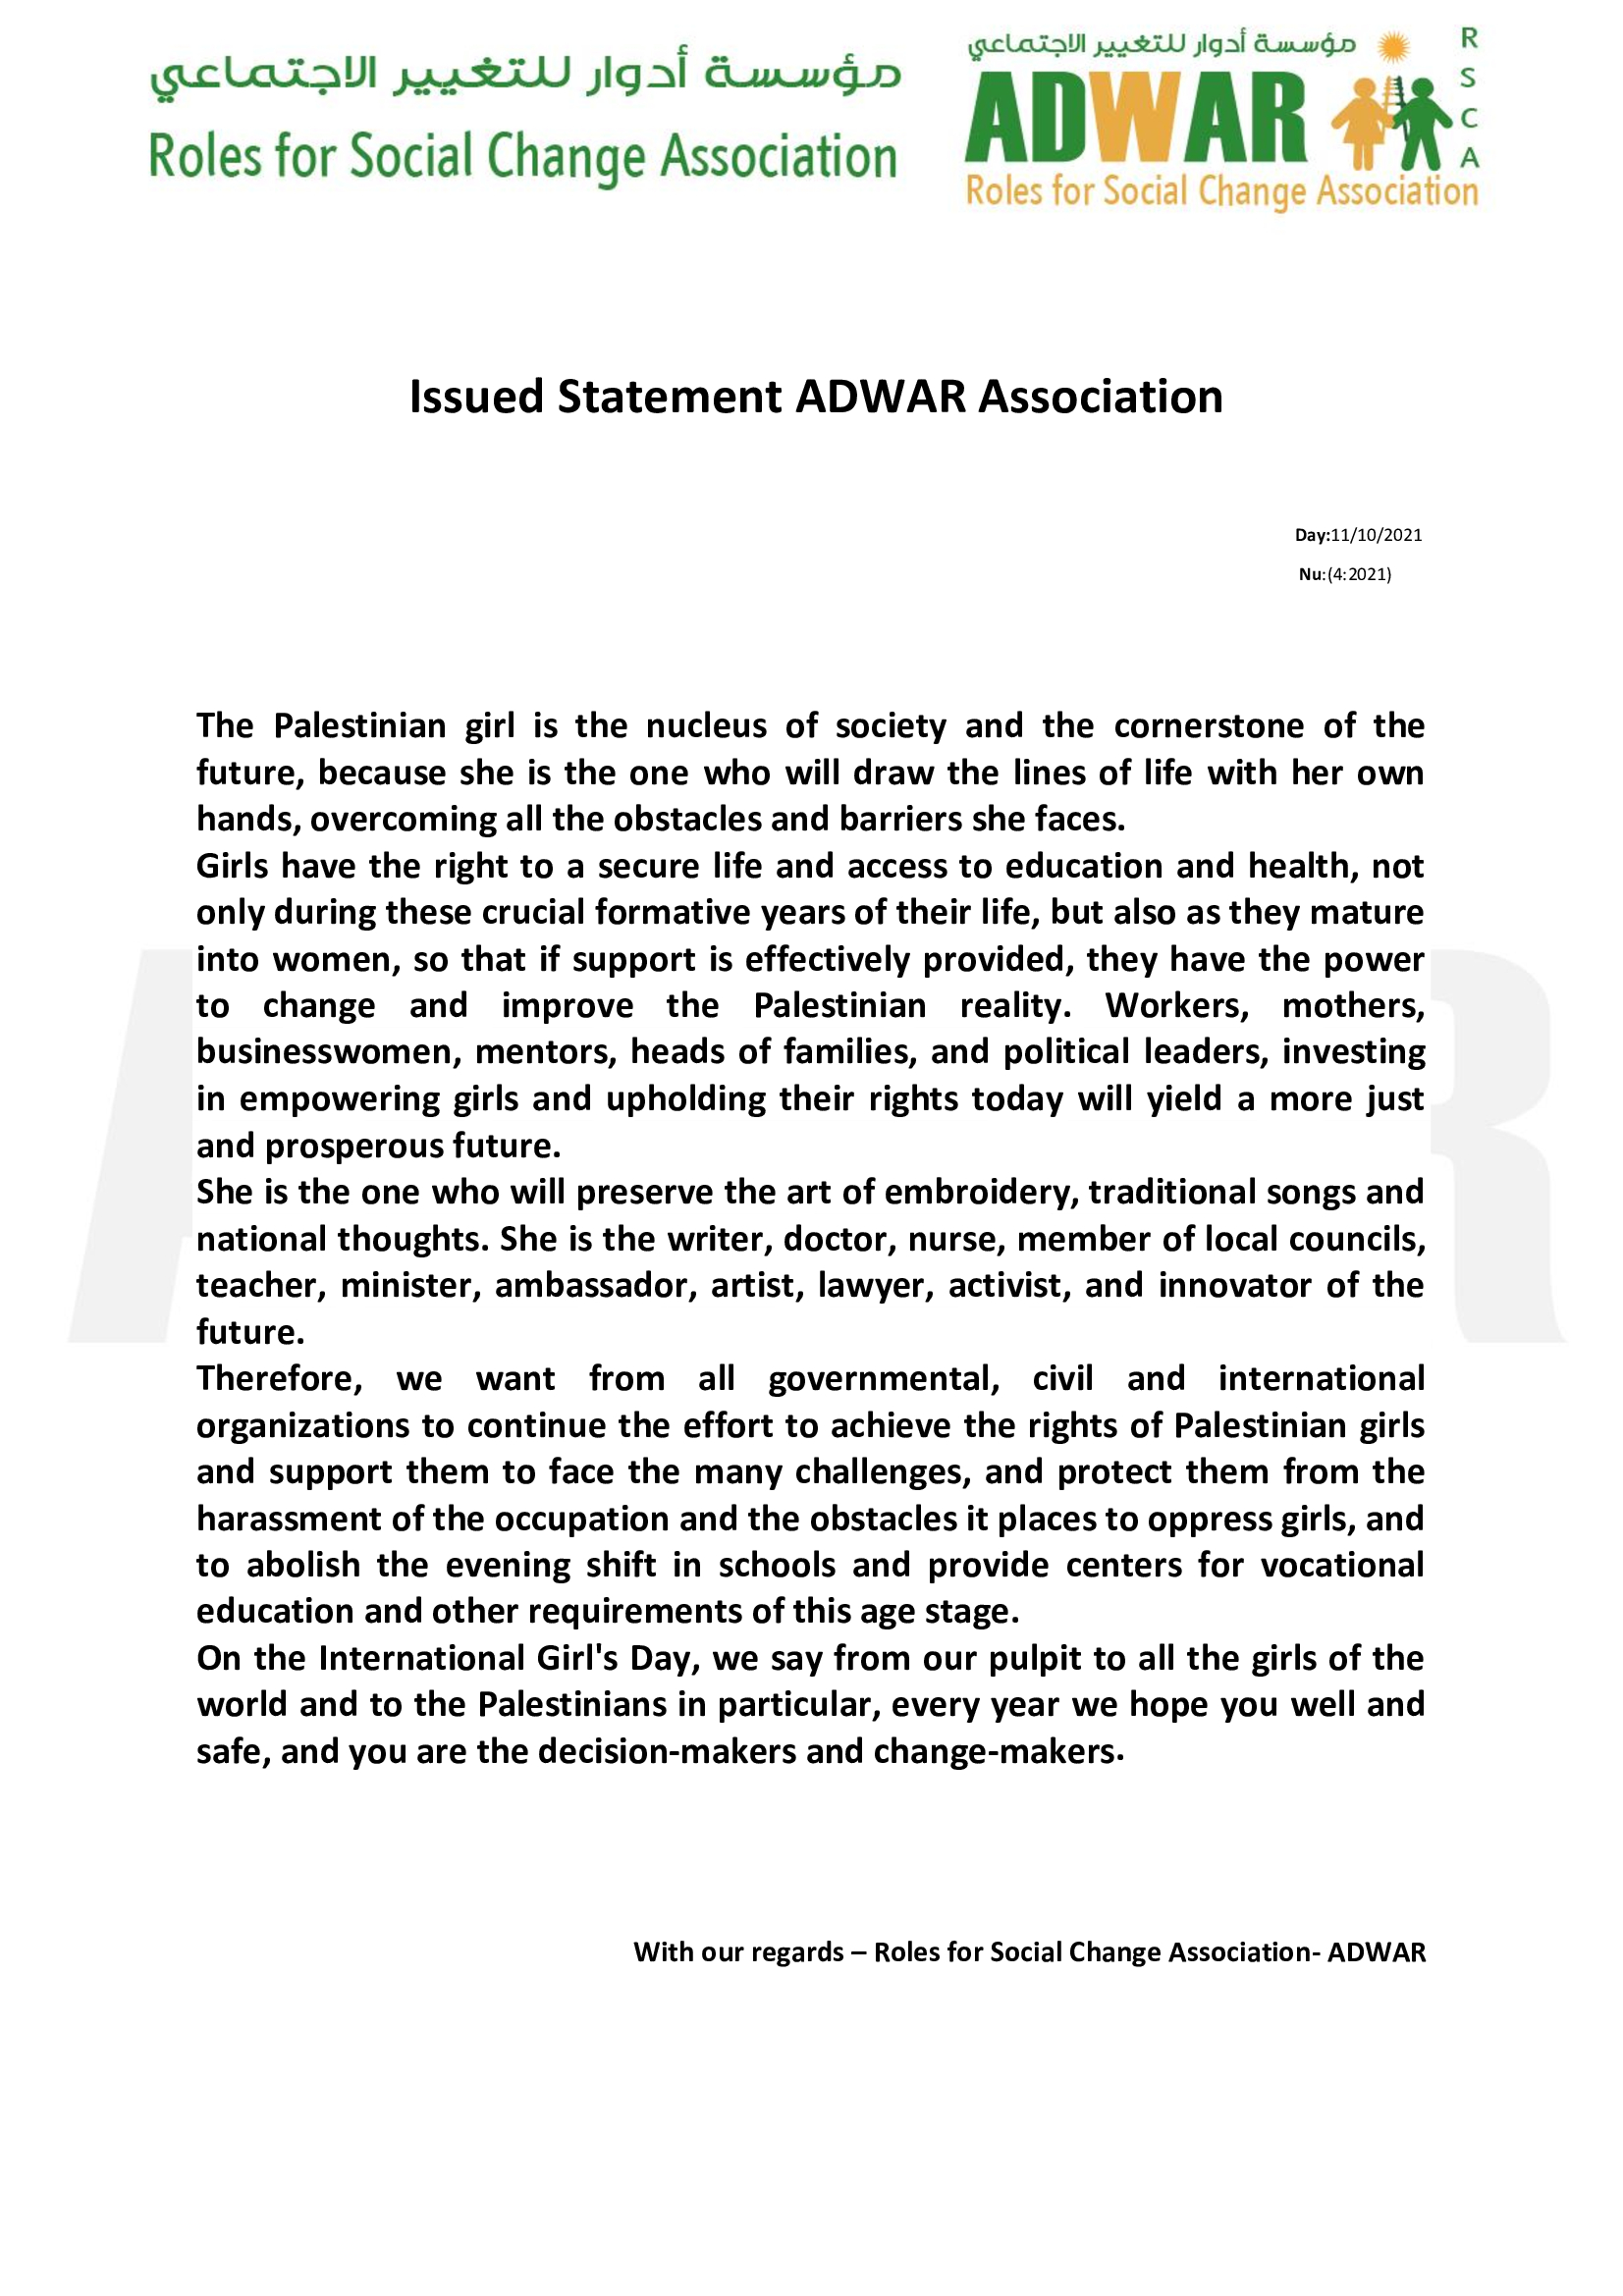  Issues Statement ADWAR Association